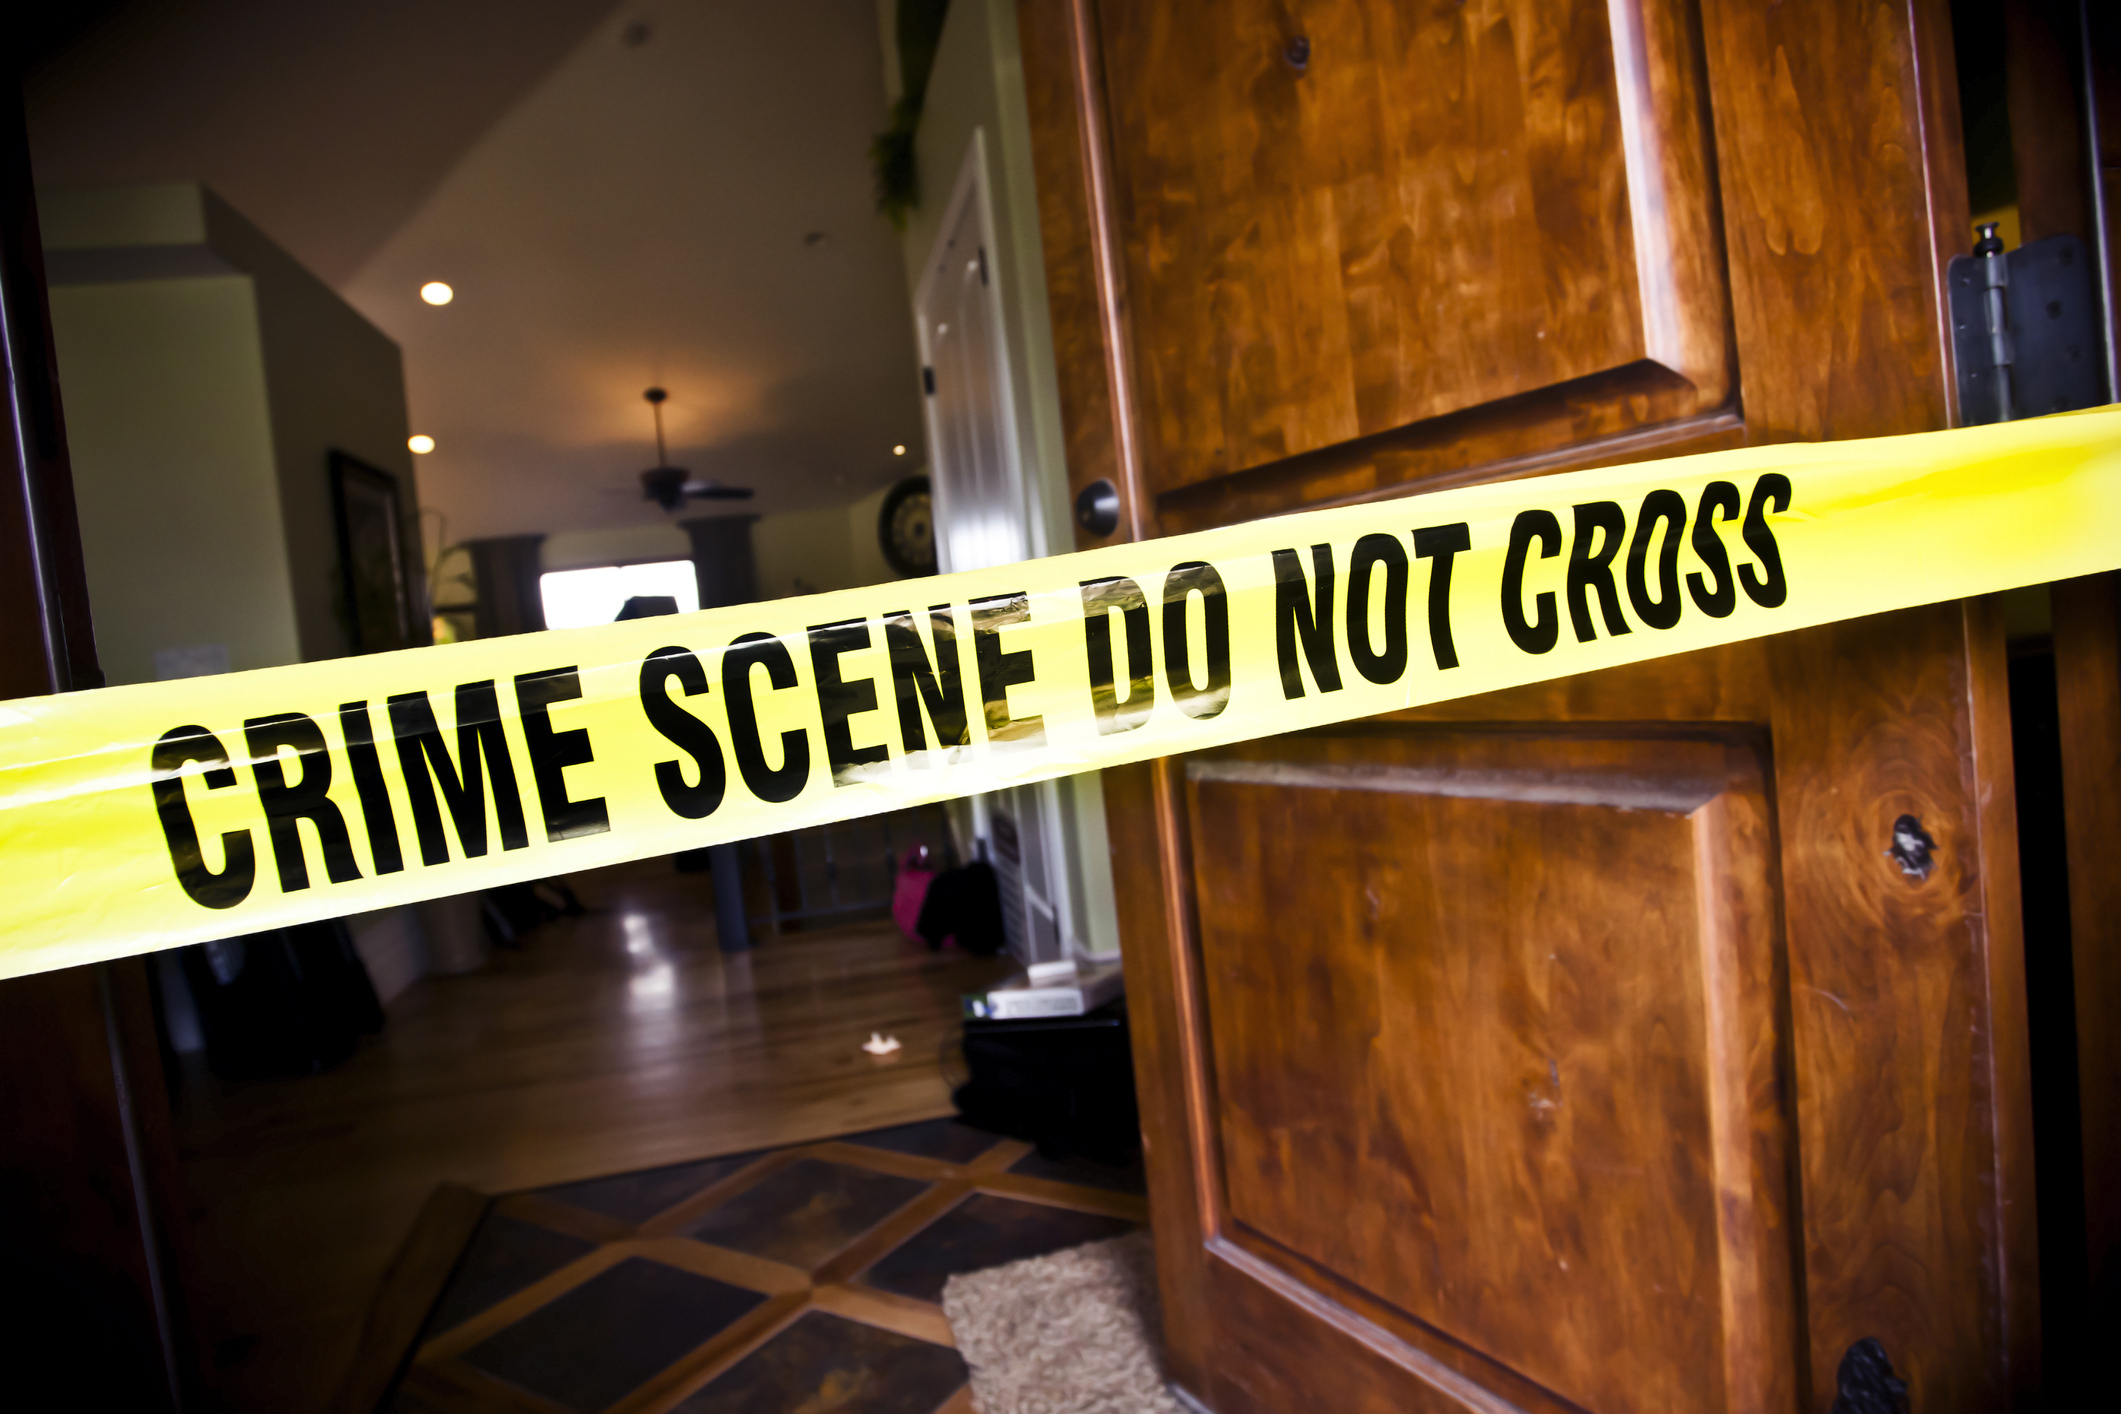 Crime scene tape across a door, indicating an investigation area inside